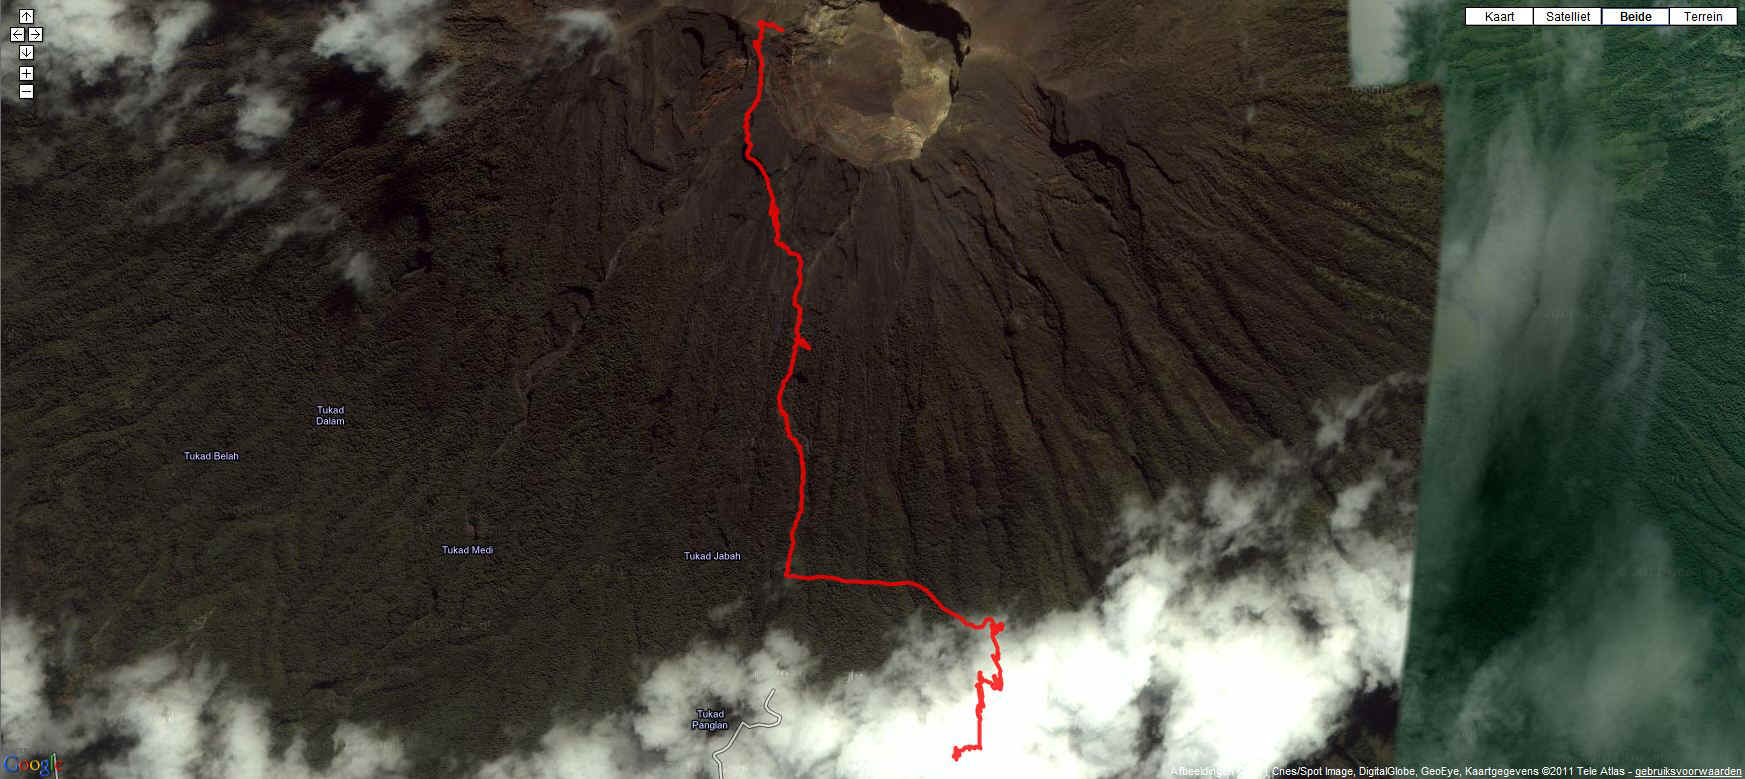 De Gunung Agung beklimming in Google Earth